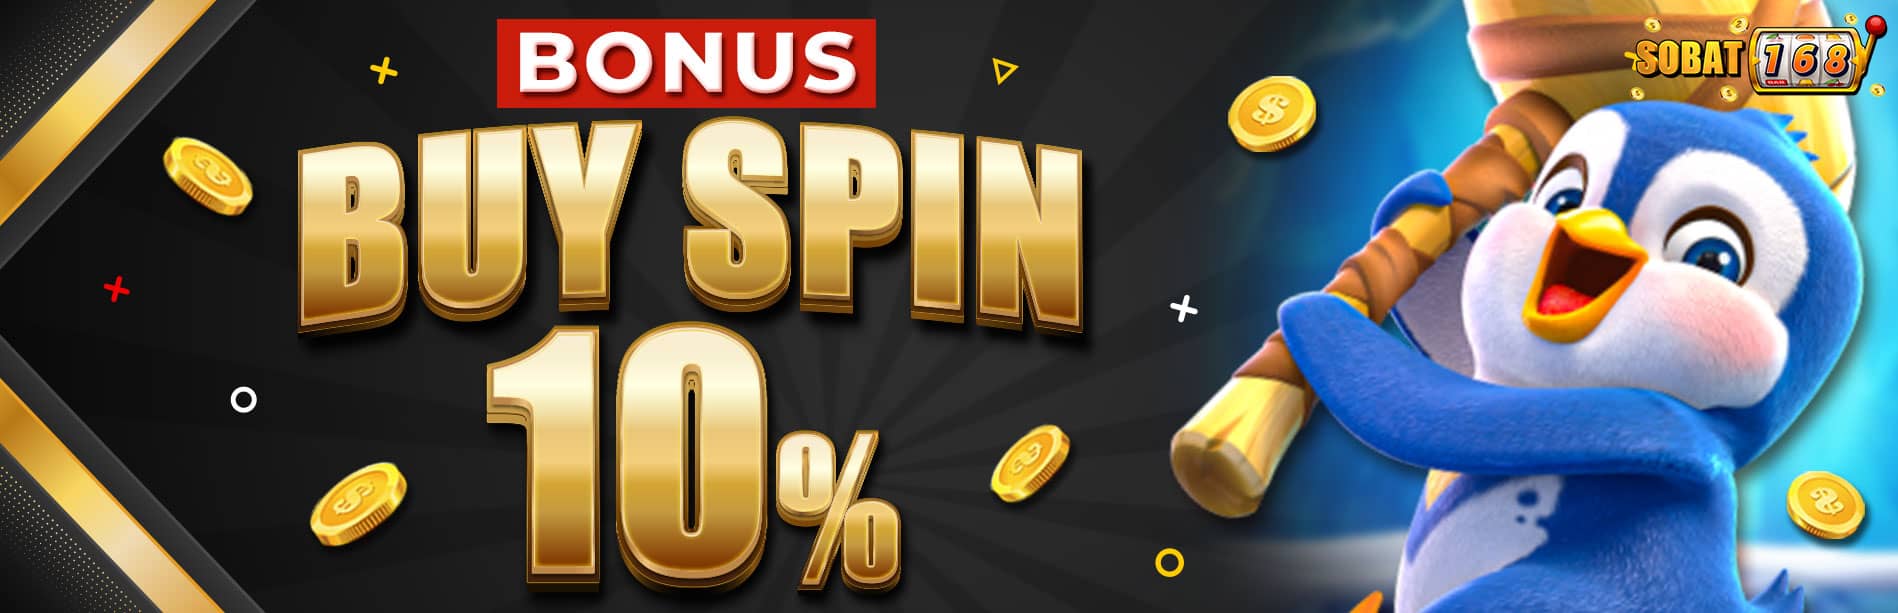 Buy Spin 10%